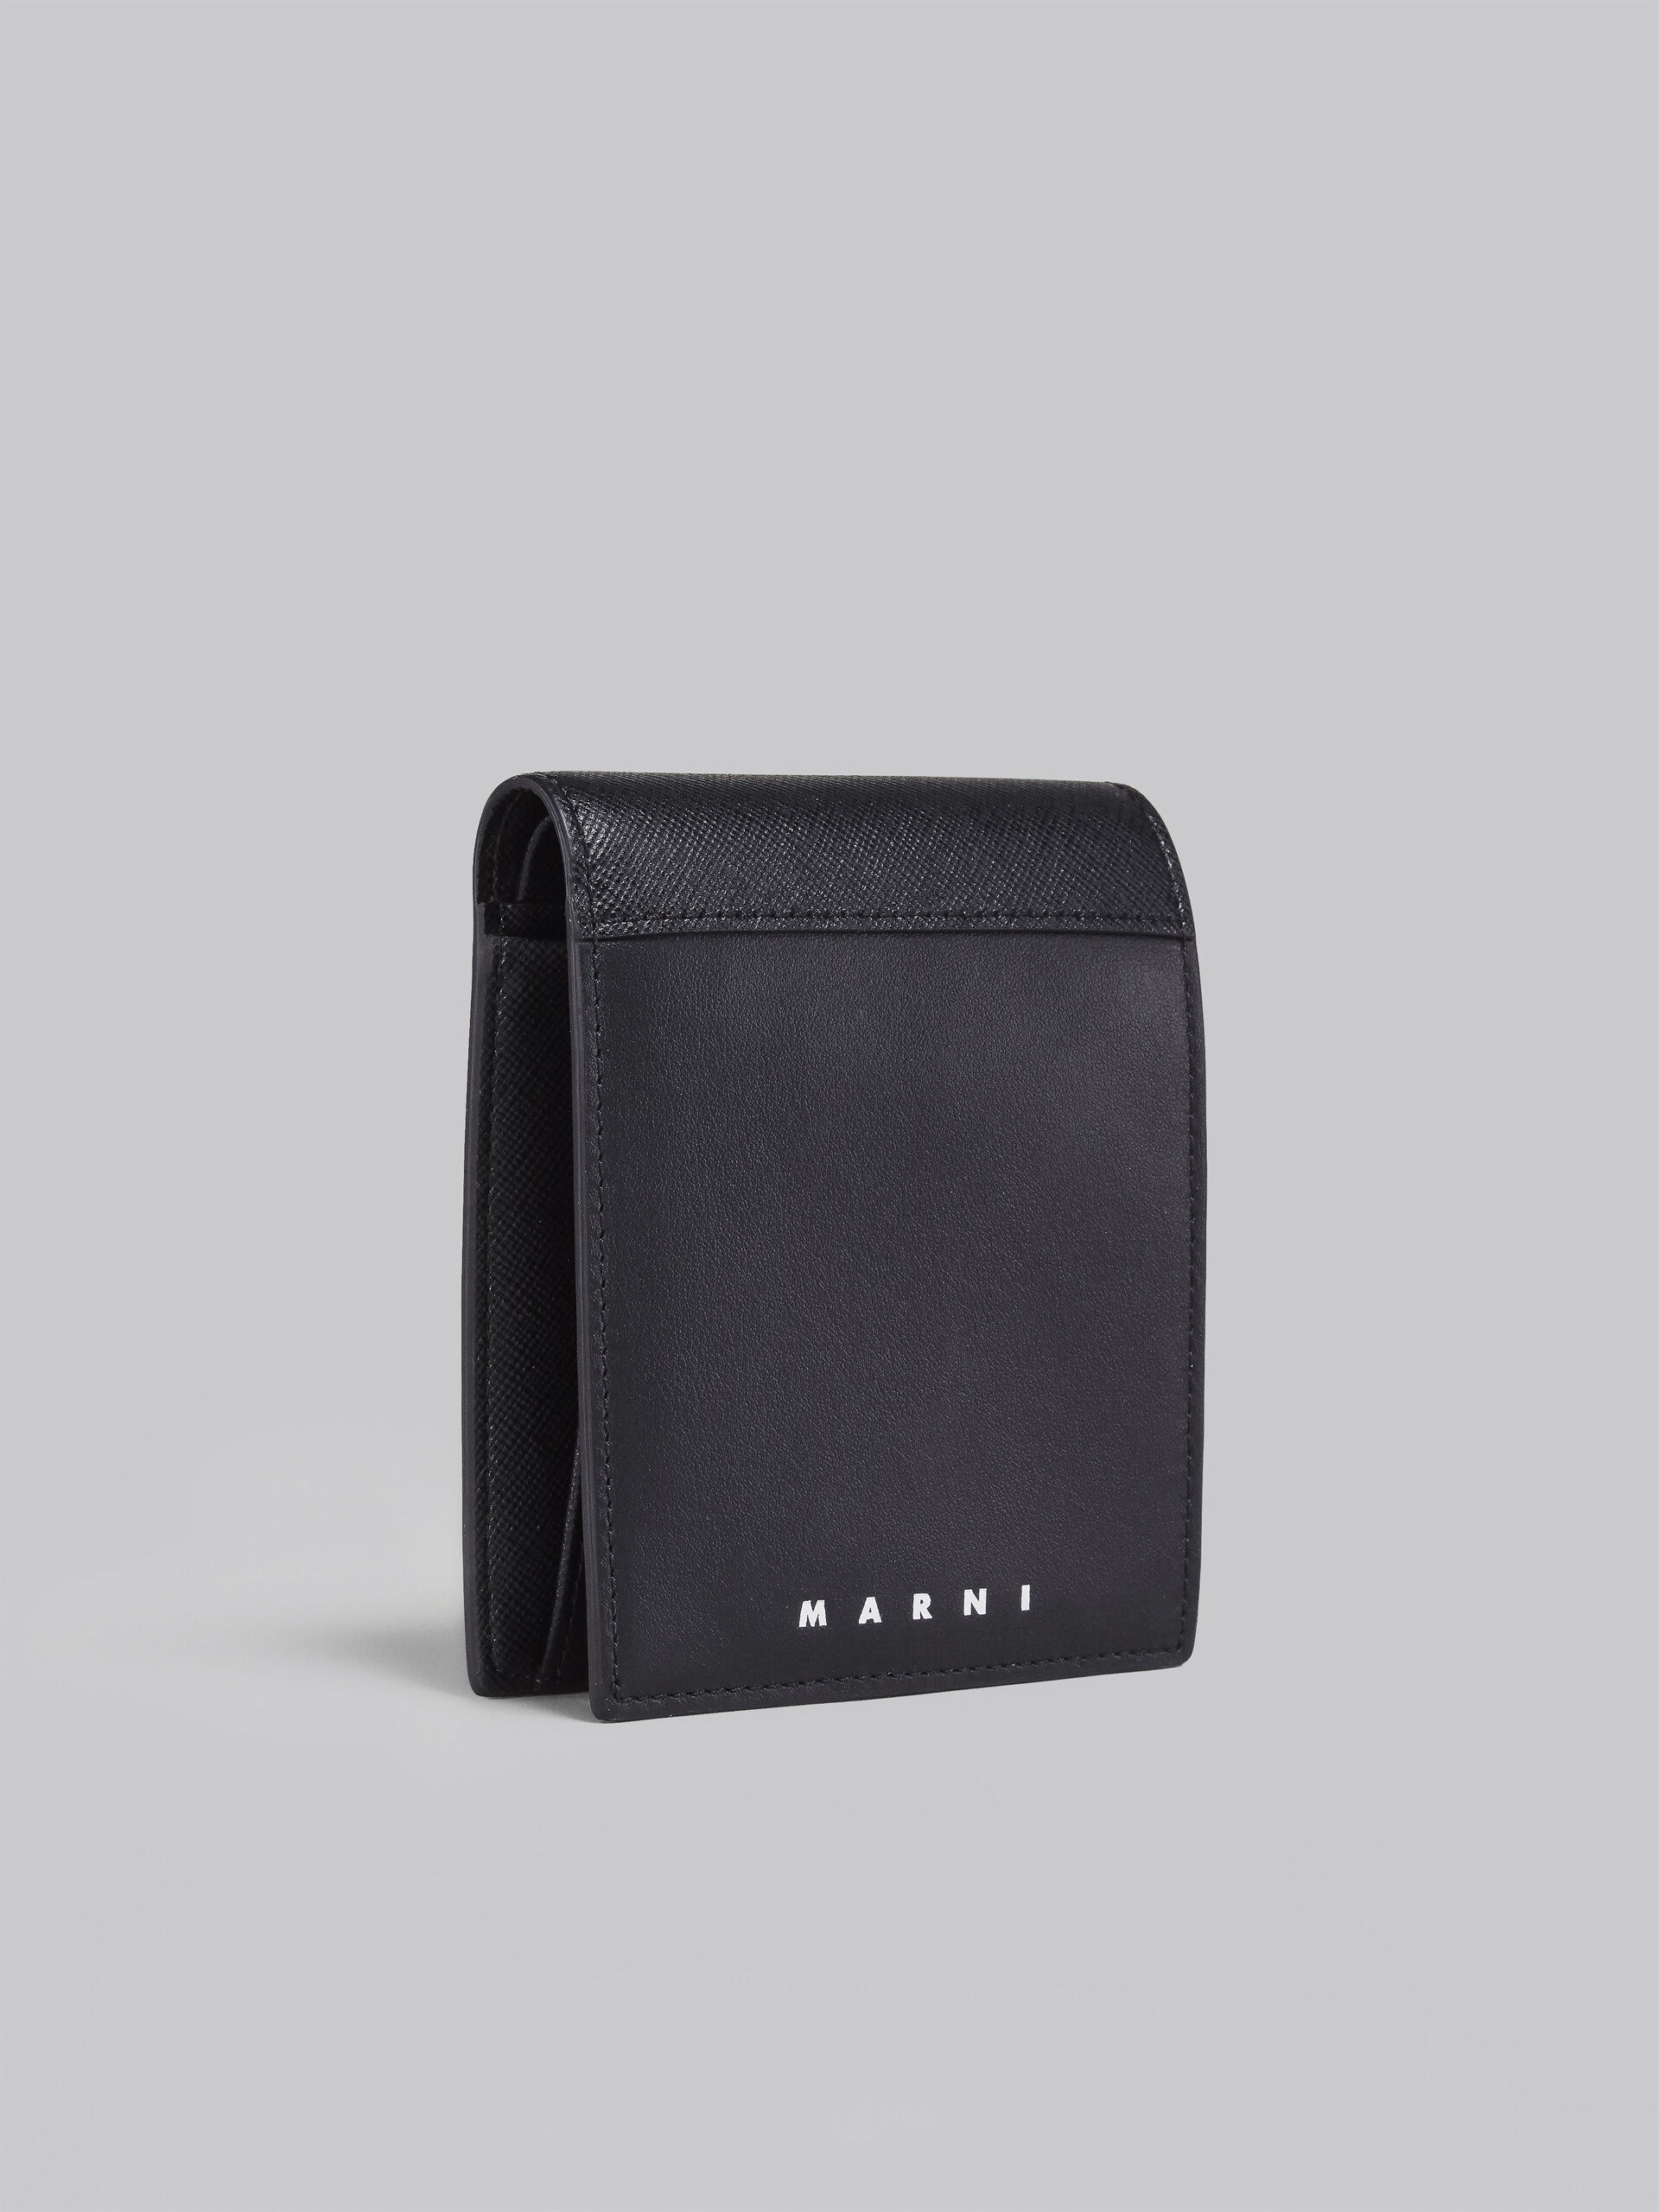 Black saffiano leather bi-fold wallet - Wallets - Image 3